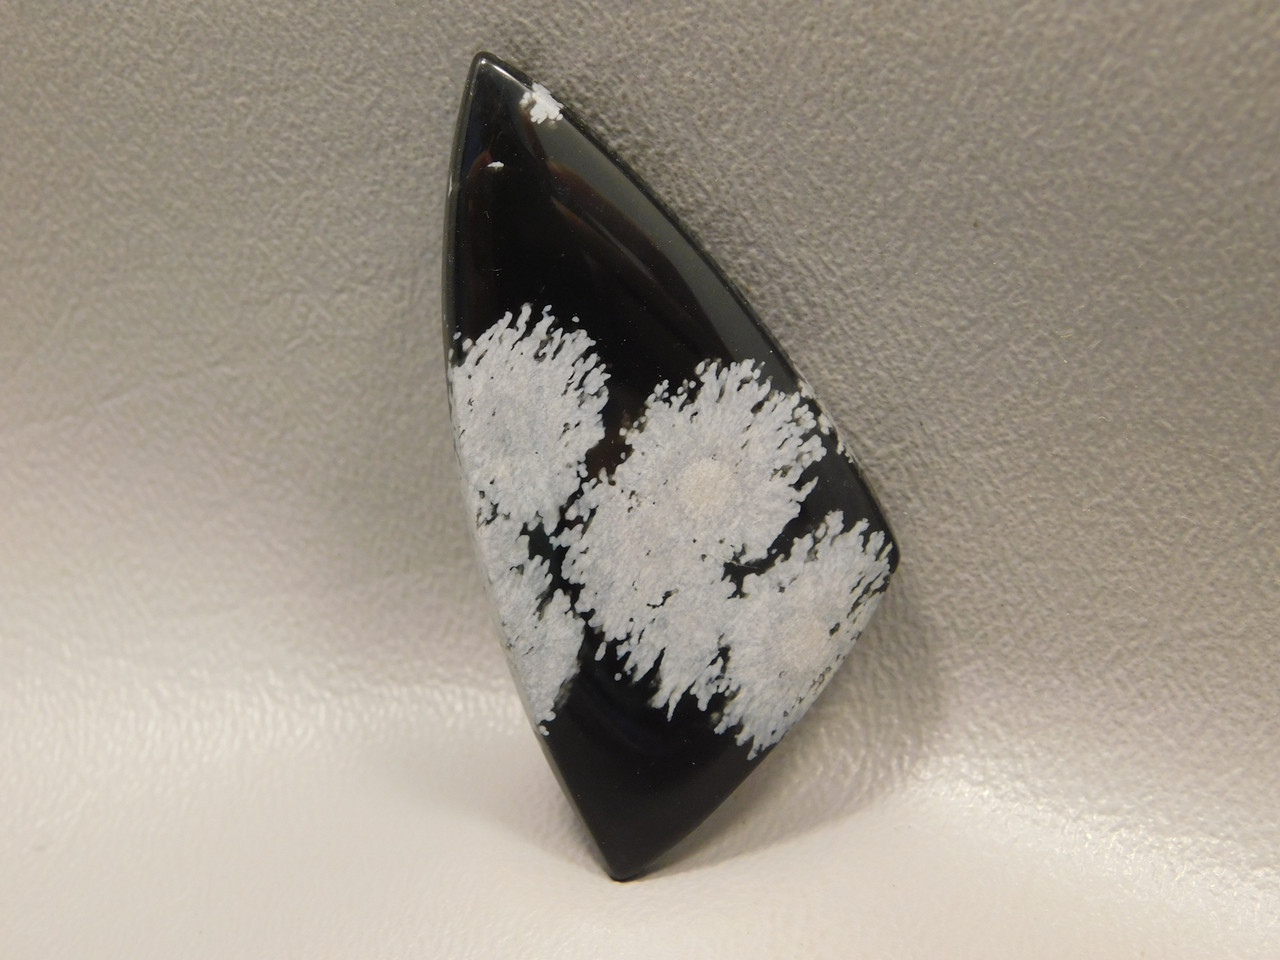 Snowflake Obsidian Designer Cabochon Sail Shaped Stone #17